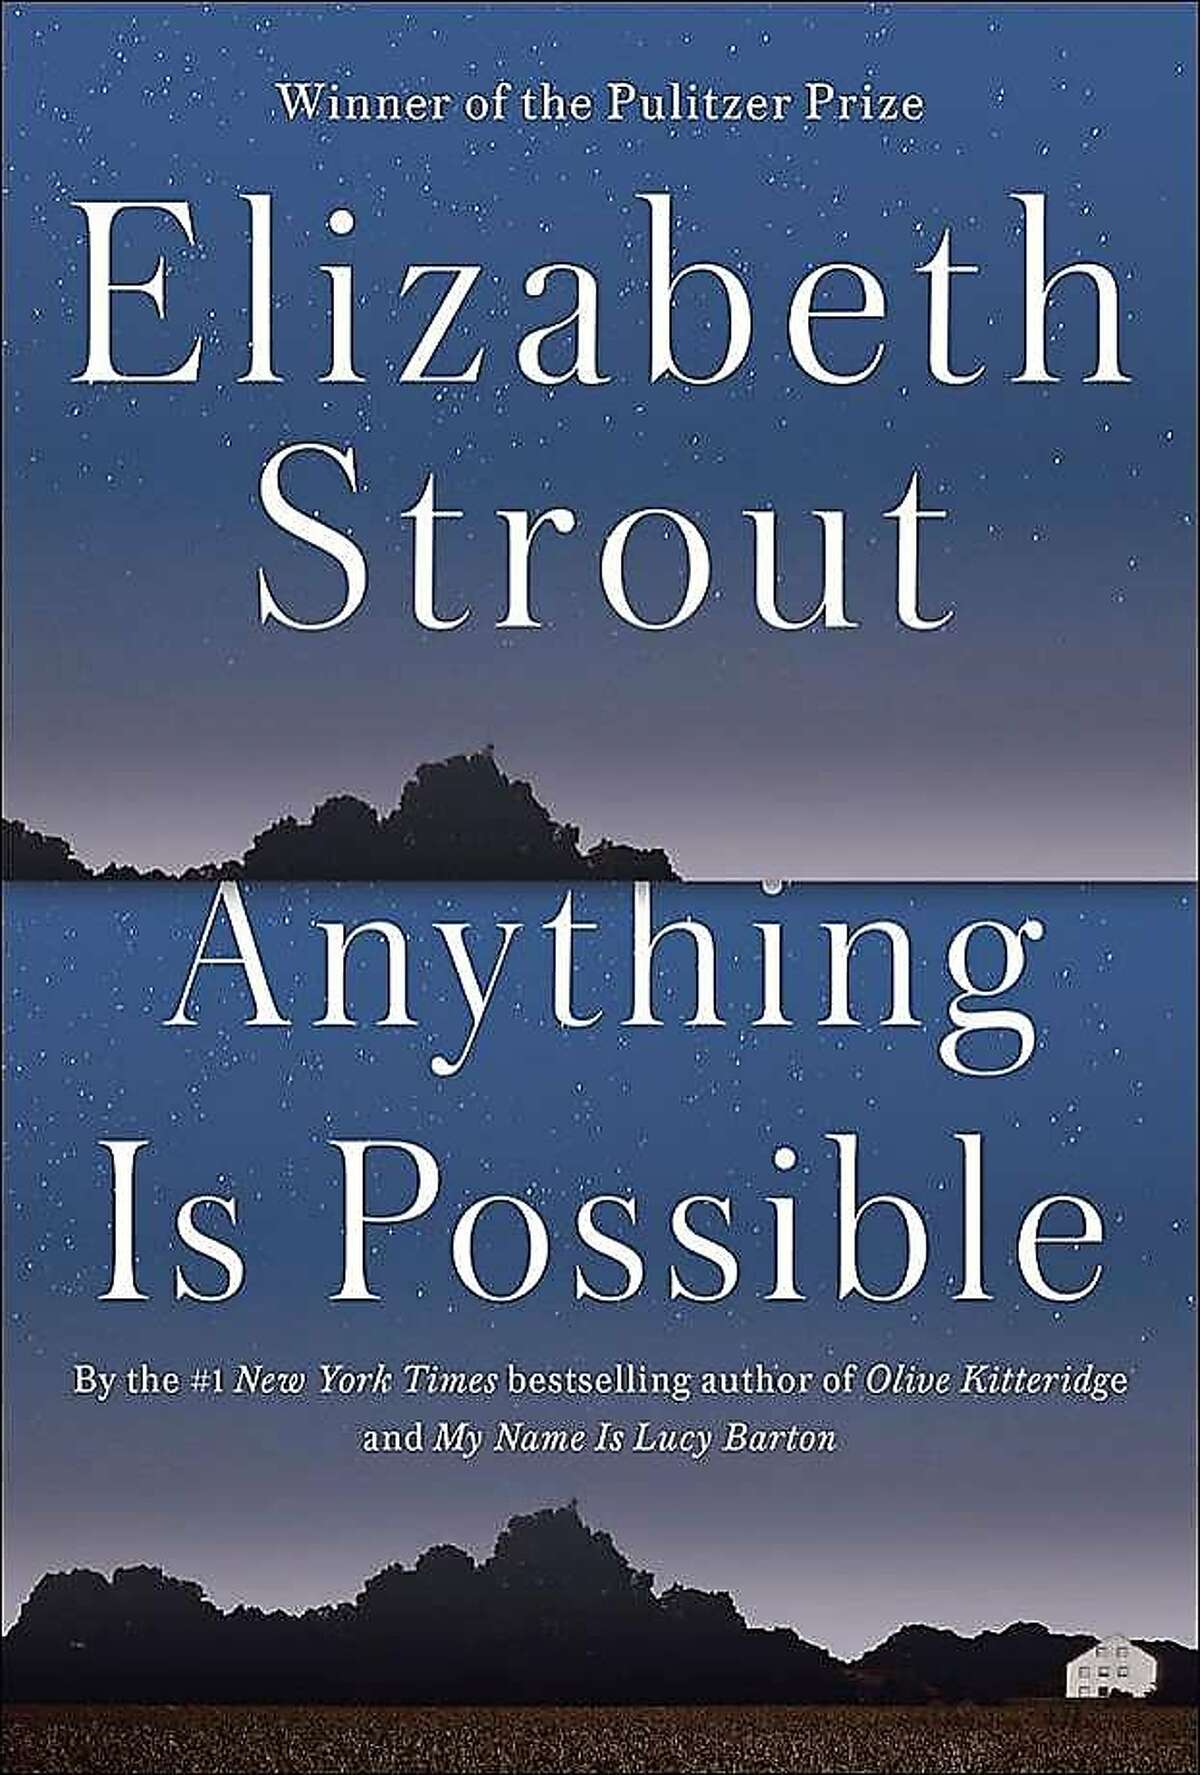 book elizabeth strout